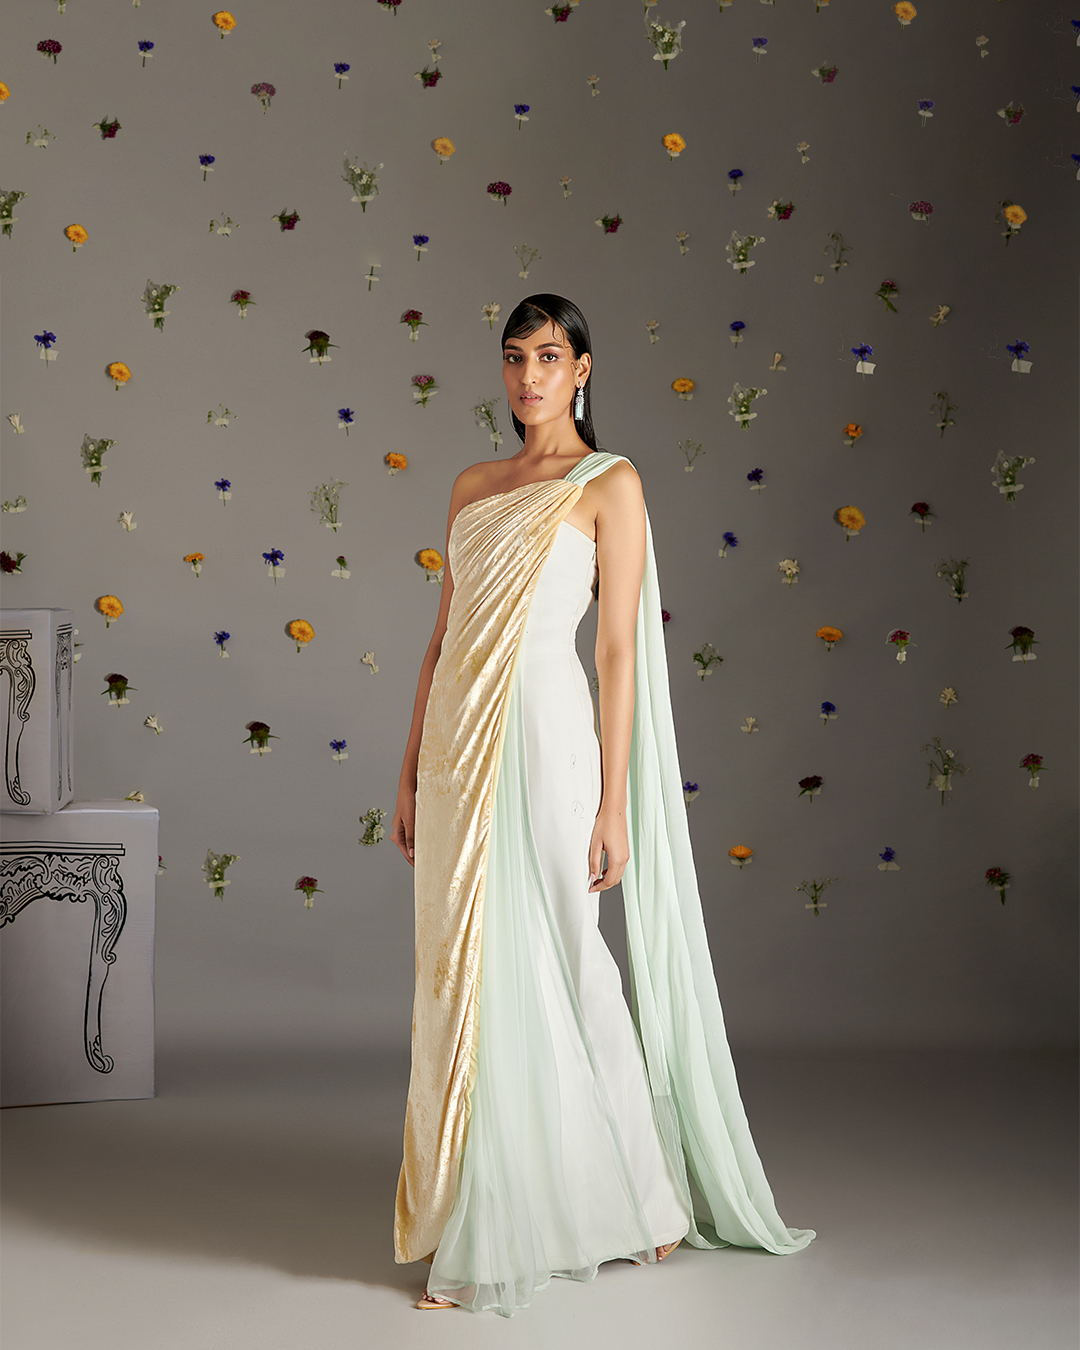 Pre Stitched Saree Dress. A pre stitched saree dress is a modern… | by  Fresh Look Fashion | Medium